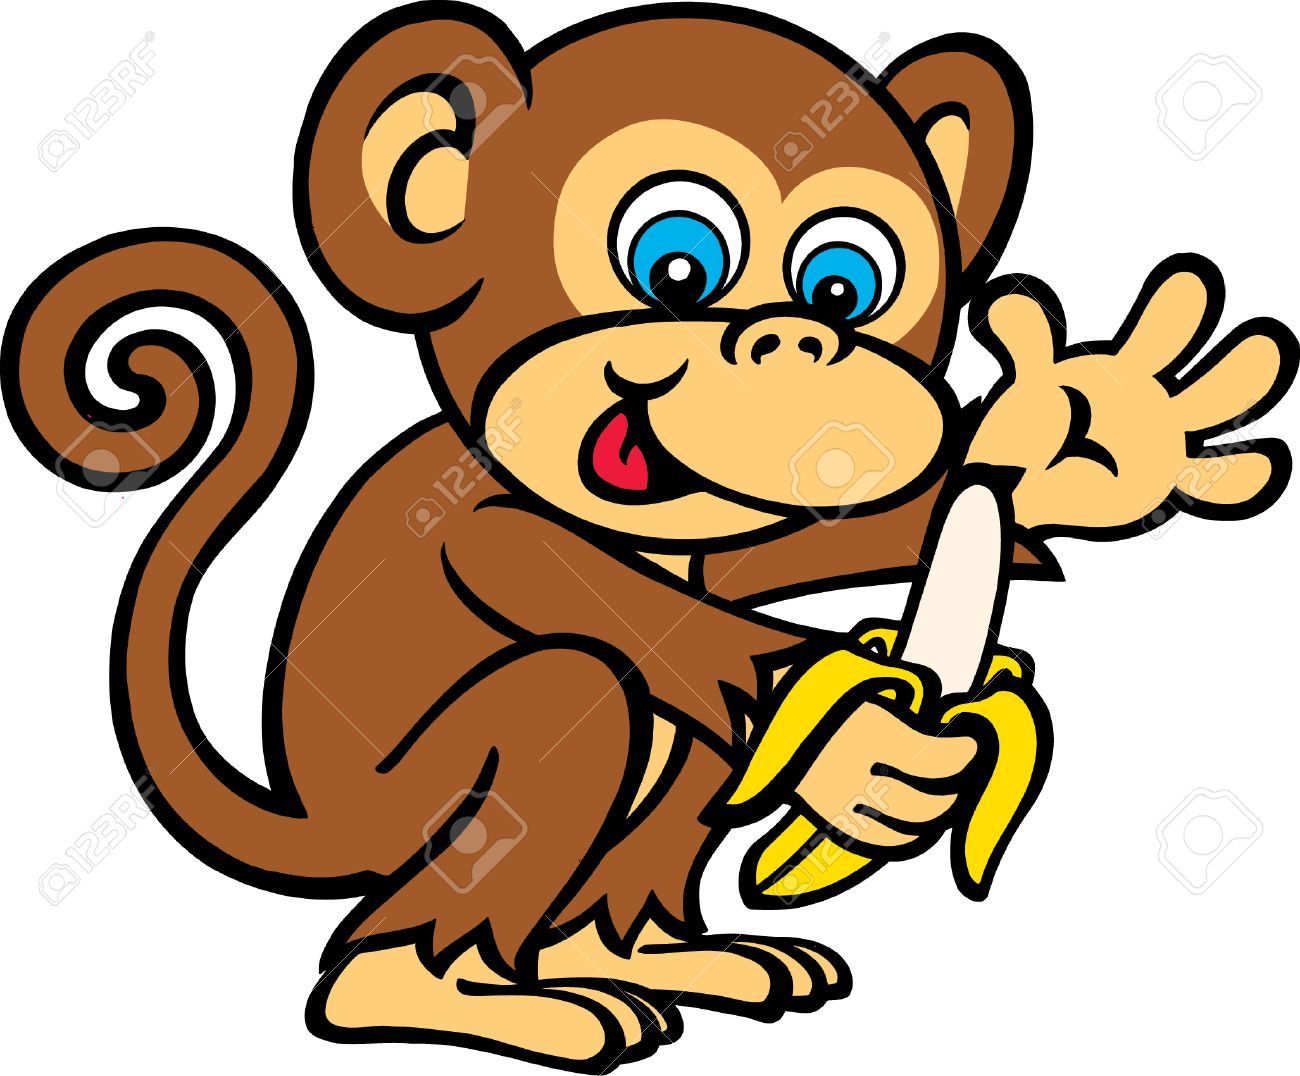 Monkey eating banana clipart 8 » Clipart Portal.